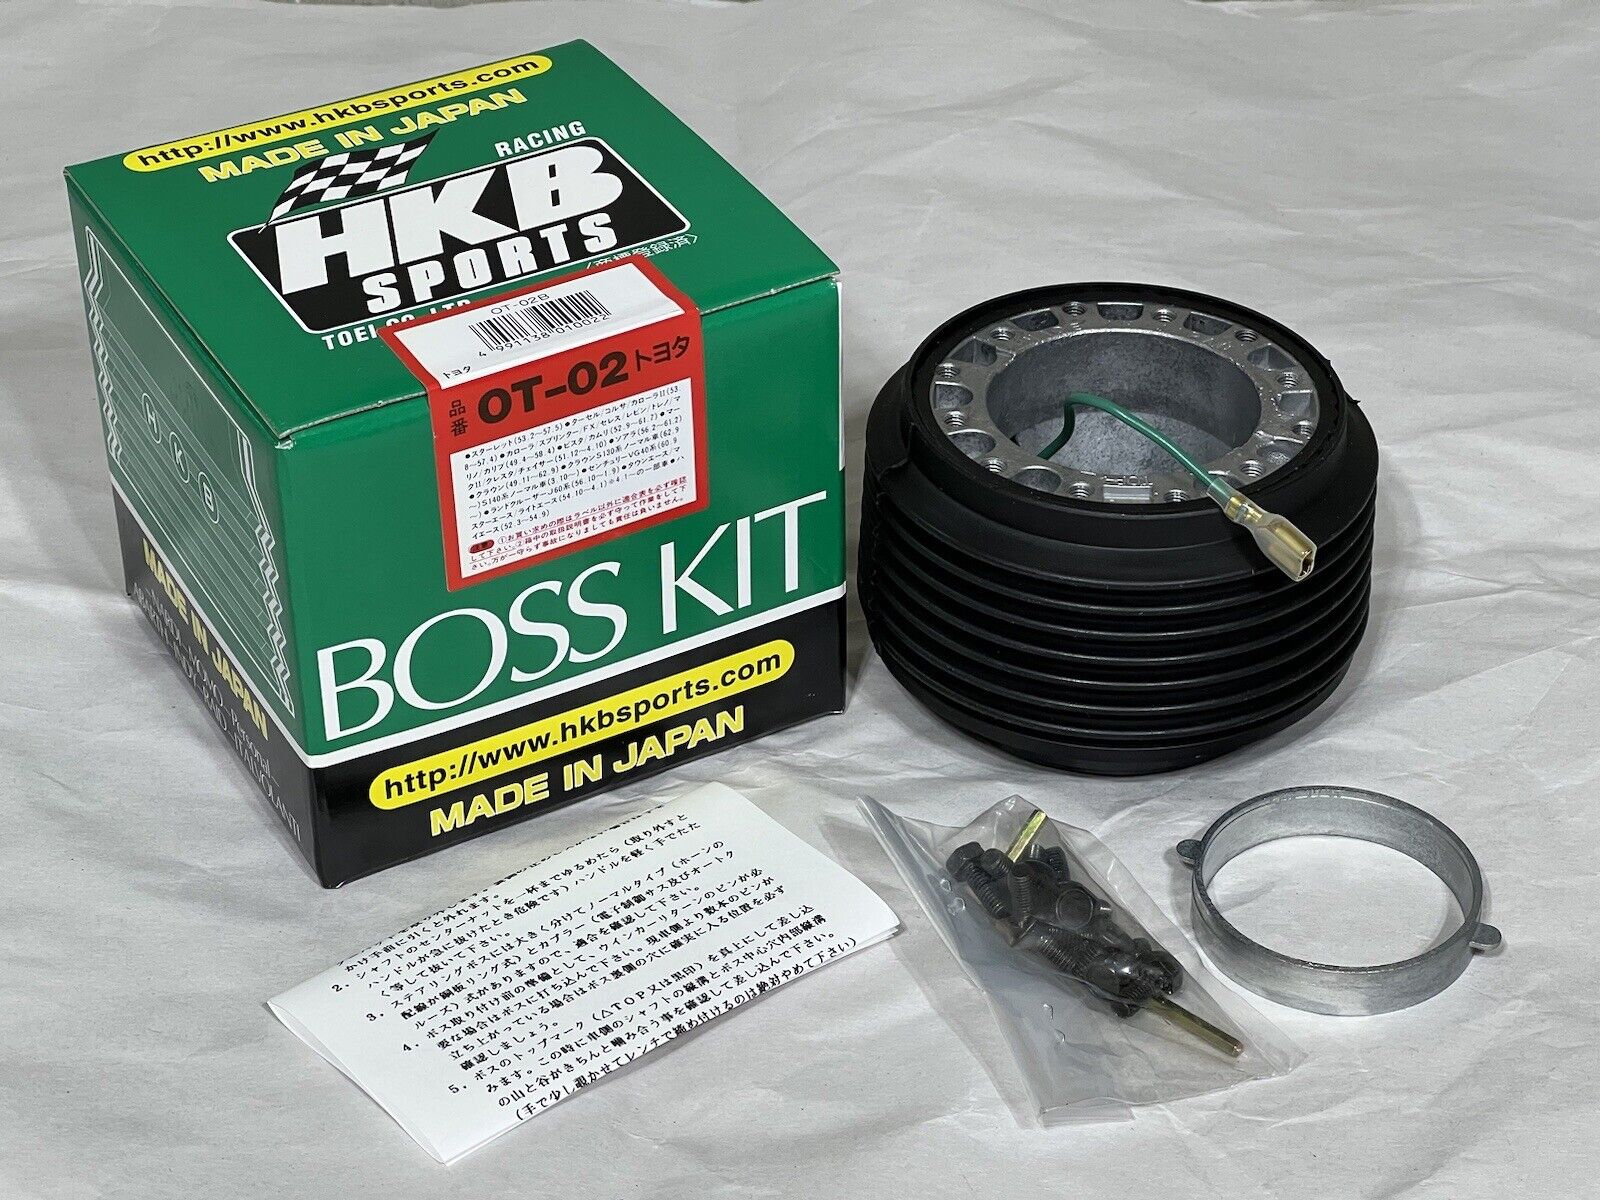 HKB SPORTS Steering Wheel Adapter Kit Boss Kit 81-85 Toyota Soarer MZ11